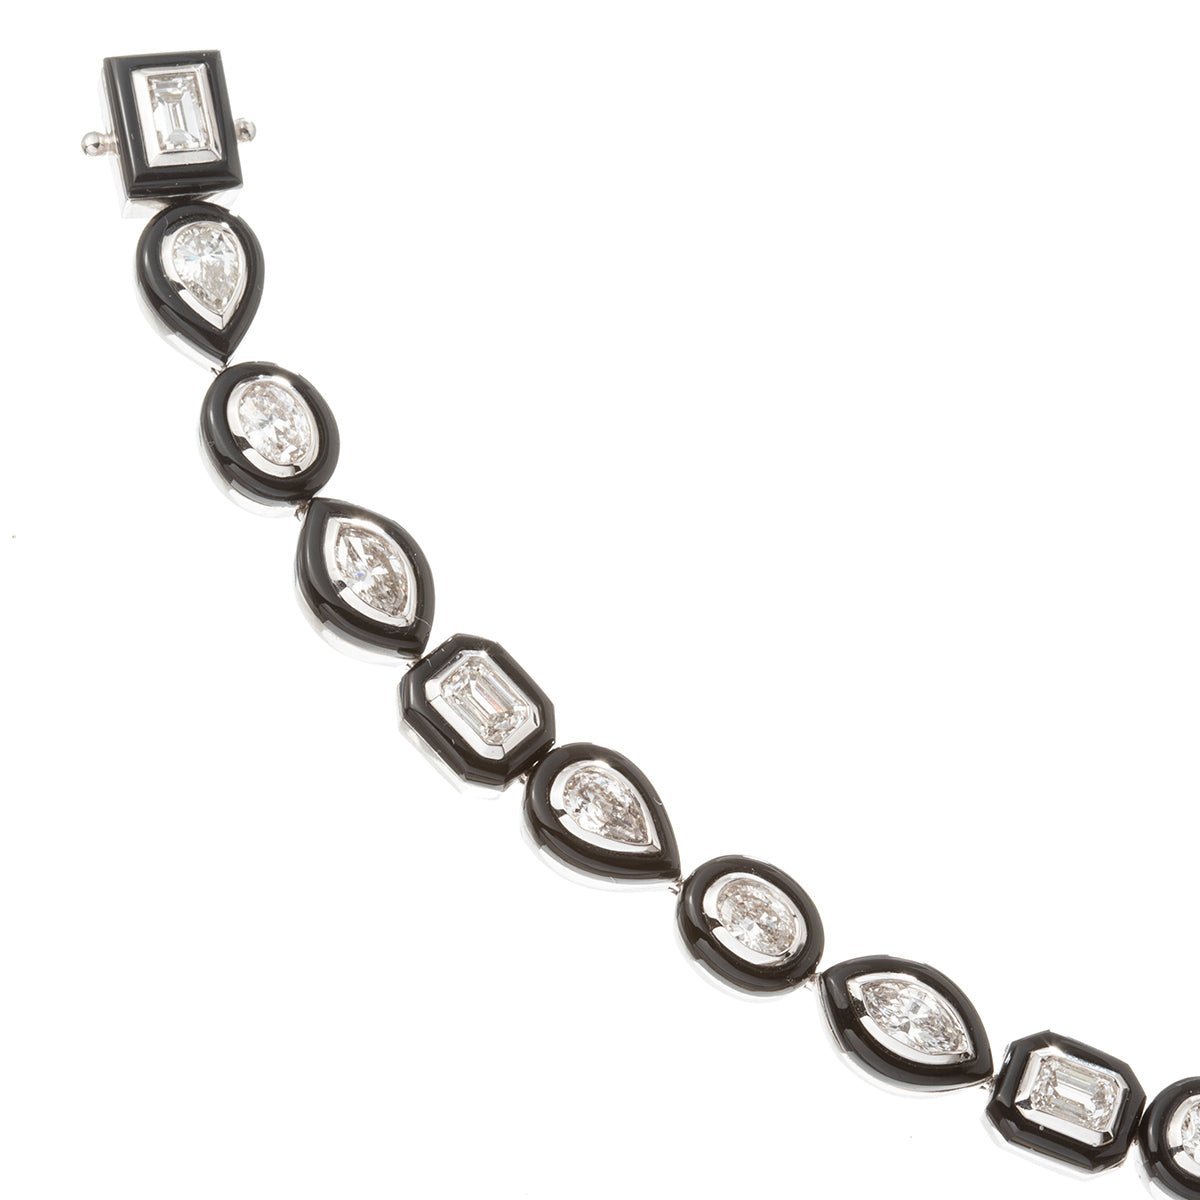 Greenleaf & Crosby - 18k White Gold Mixed-Shaped Diamond Black Agate Bracelet